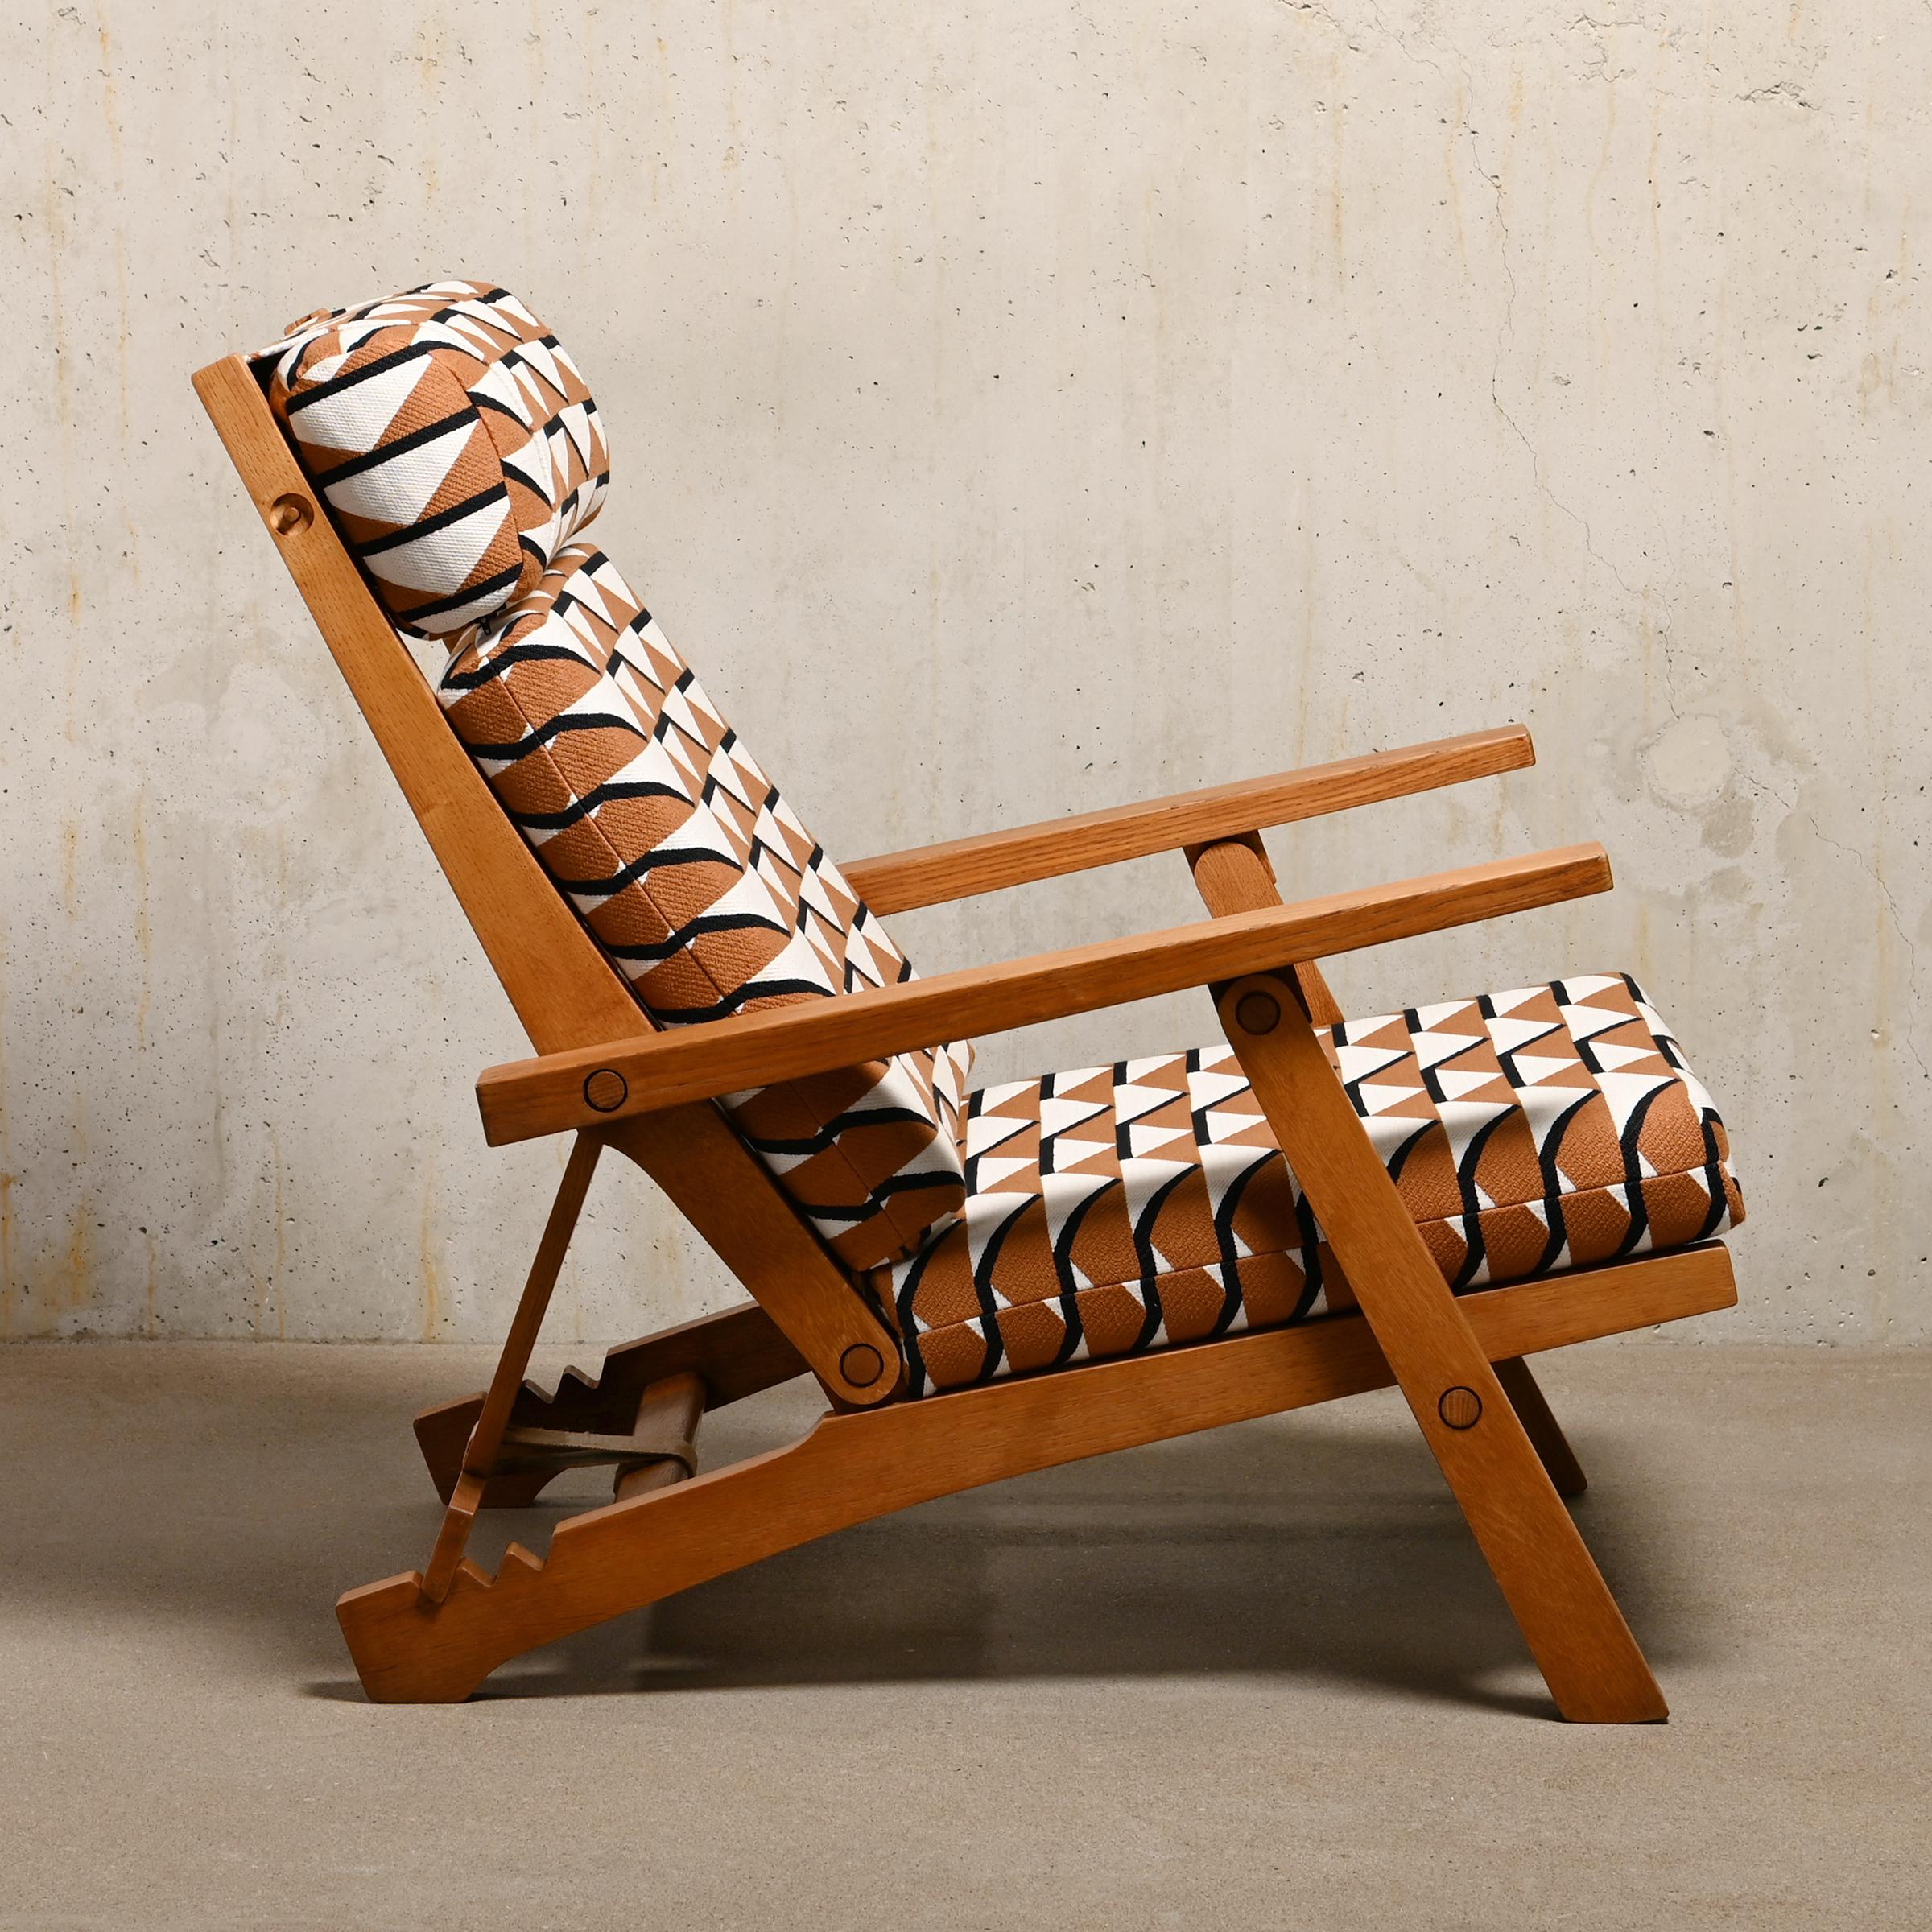 Hans J. Wegner Lounge Chair AP 72 in Oak and Pierre Frey fabric for AP Stolen 2